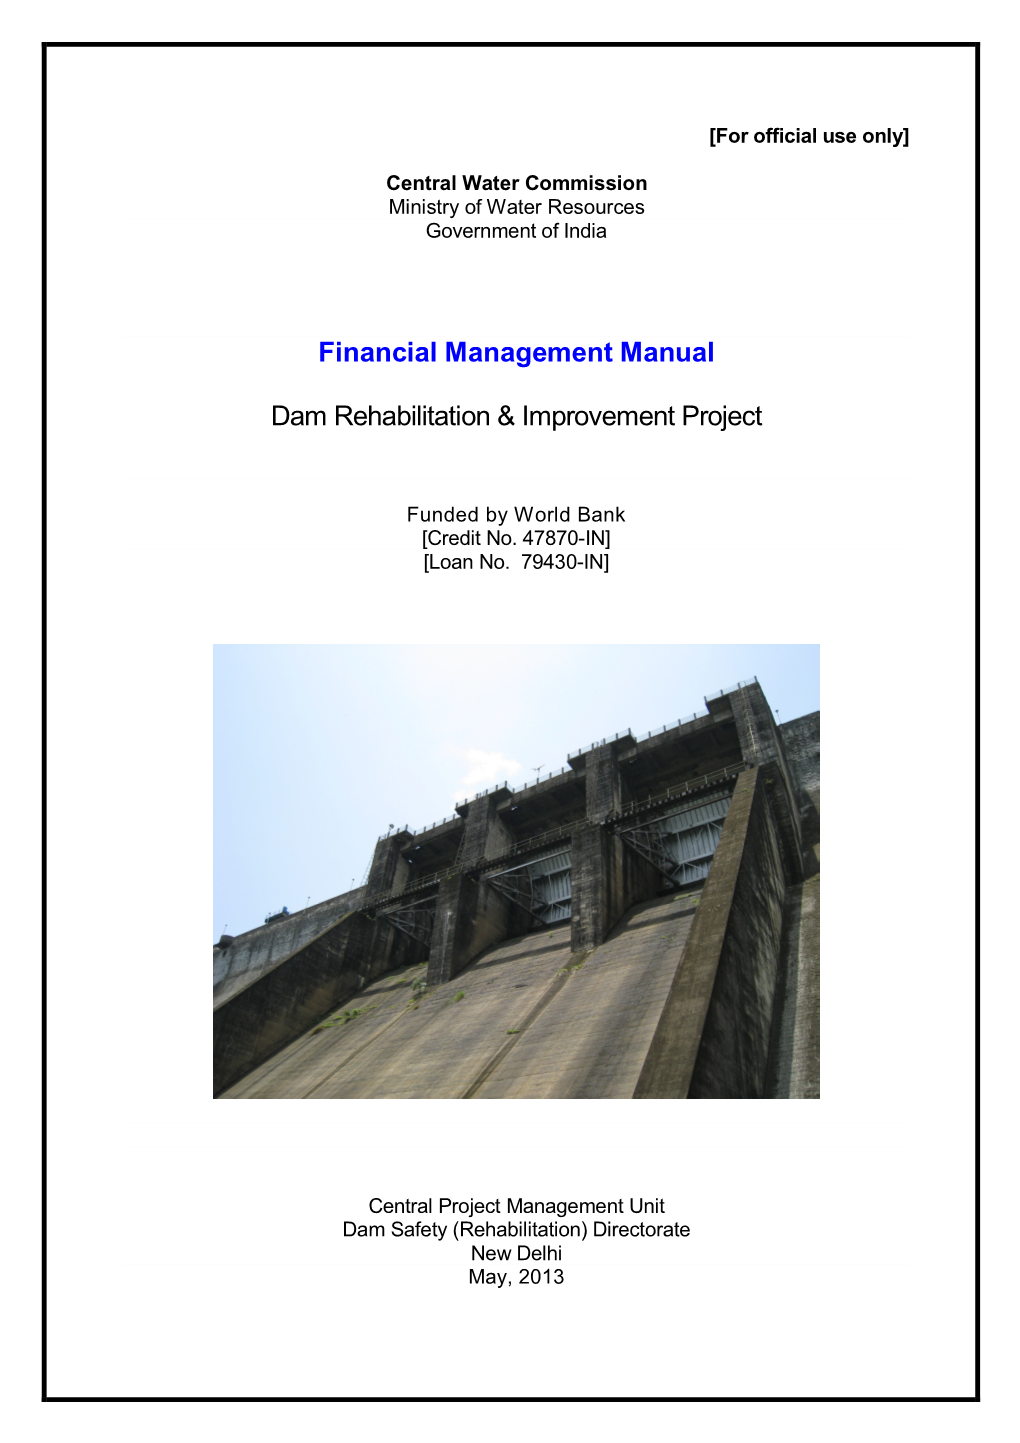 Financial Management Manual Dam Rehabilitation & Improvement Project